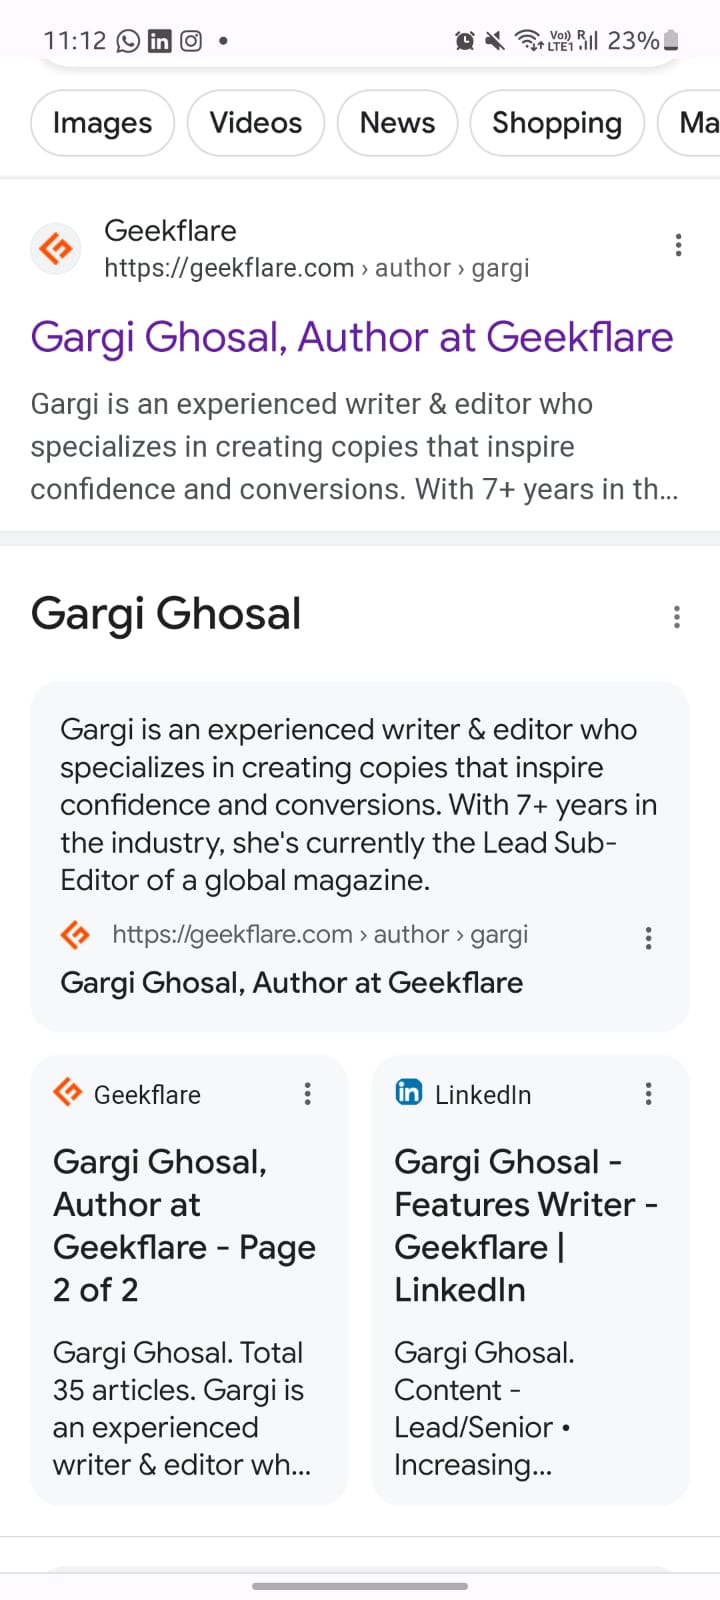 google-knowledge-graph-about-gargi